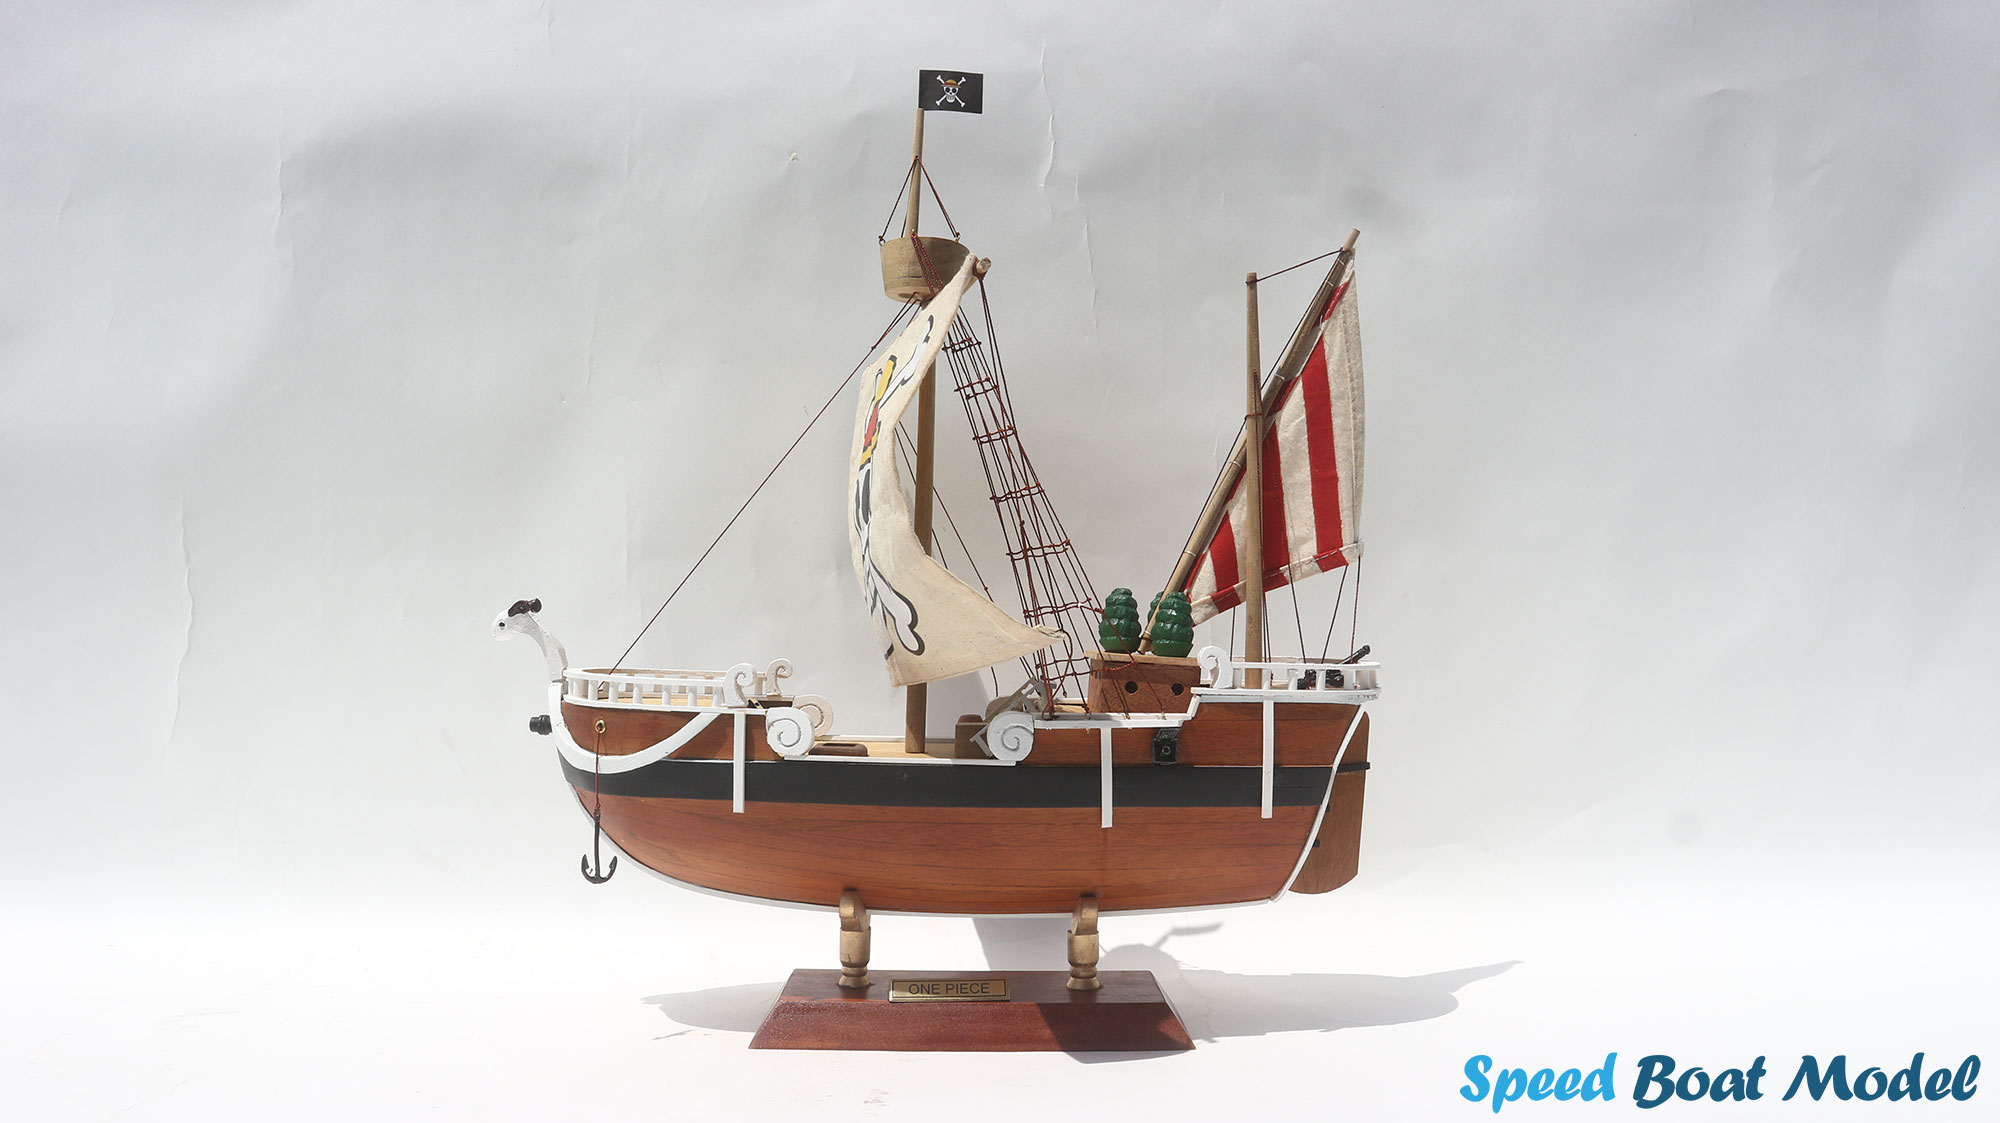 One Piece Sailing Ship Model 15.7"